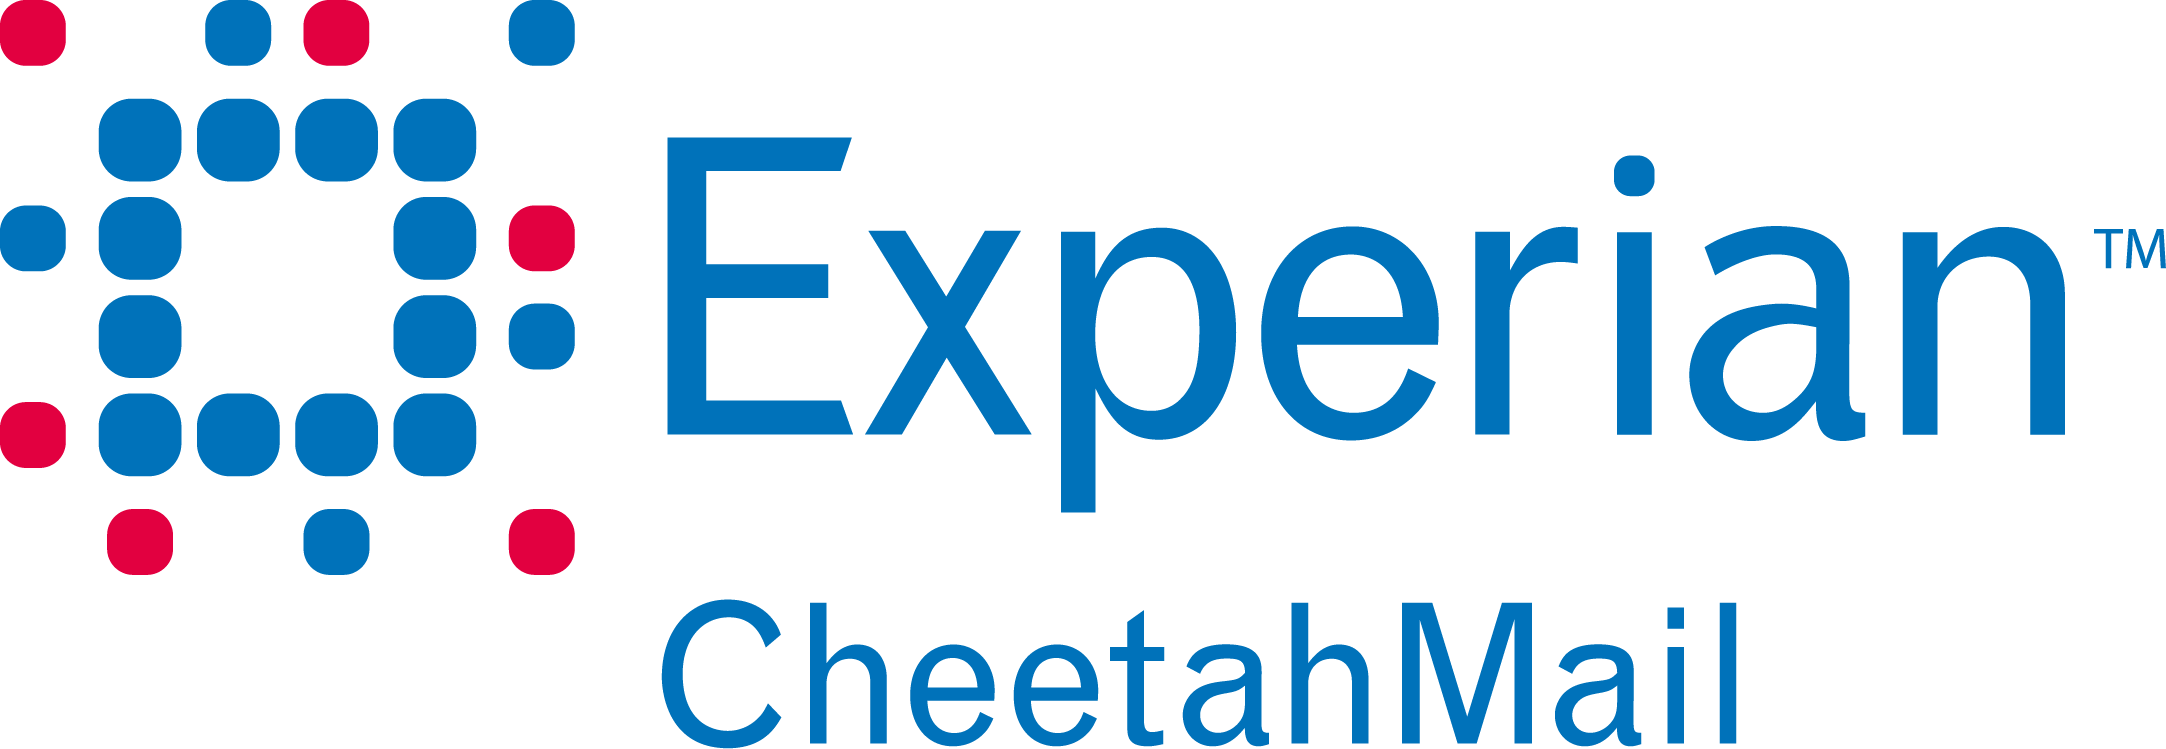 CheetahMail Logo - Index Of Pub Wikimedia Image Wikipedia Fr Archive 9 98